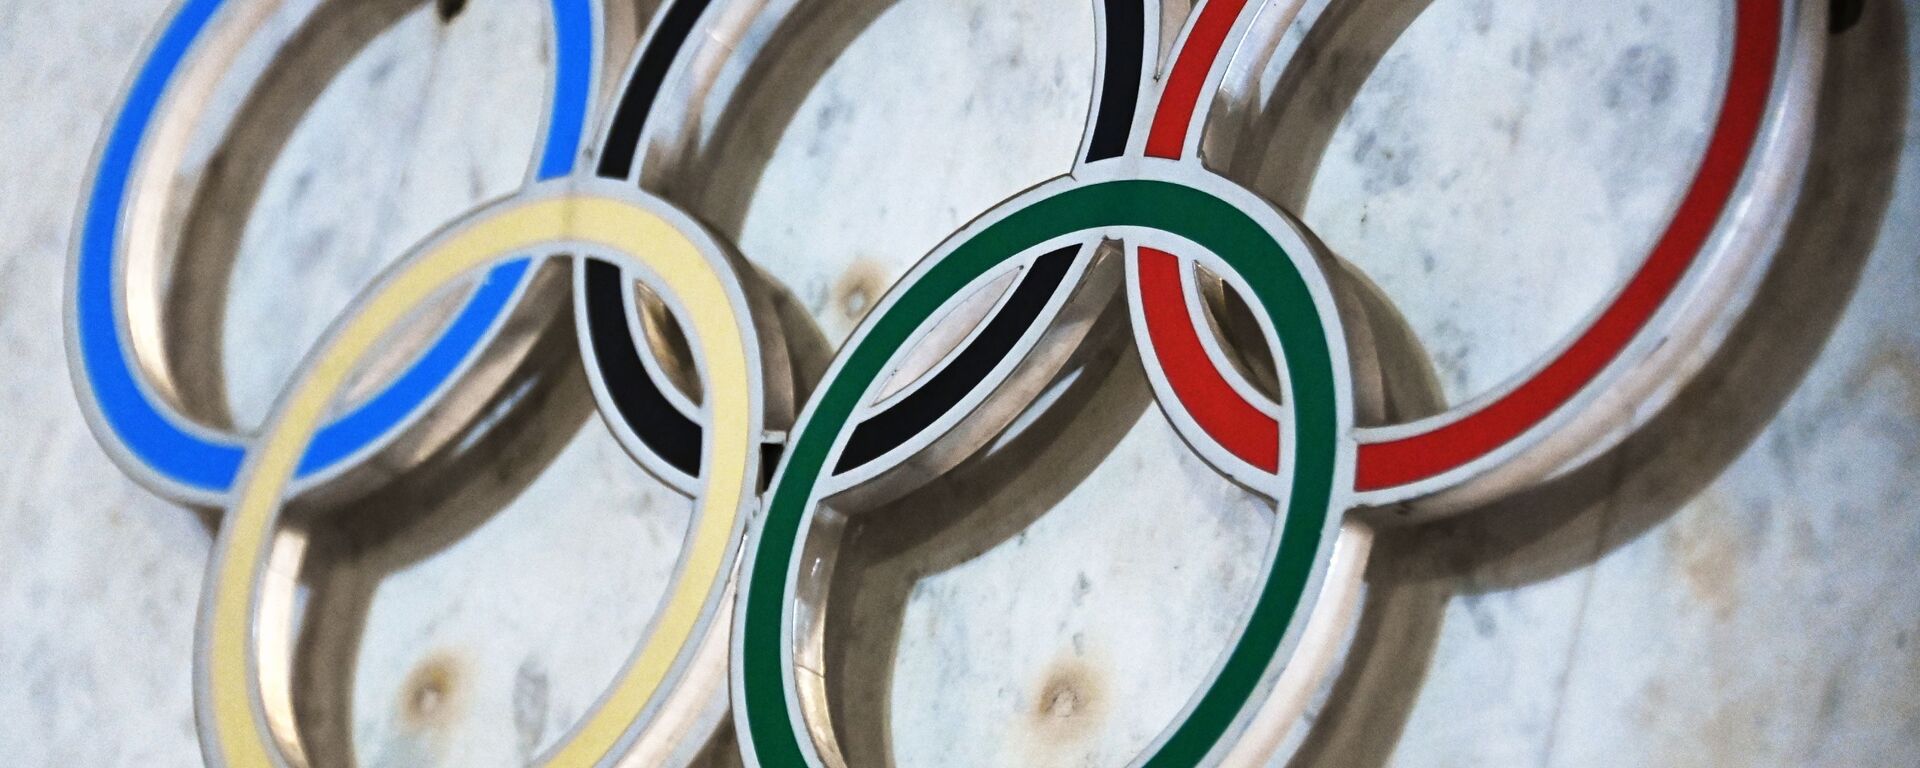 Символика на здании Олимпиады. Архивное фото - Sputnik Кыргызстан, 1920, 04.02.2021